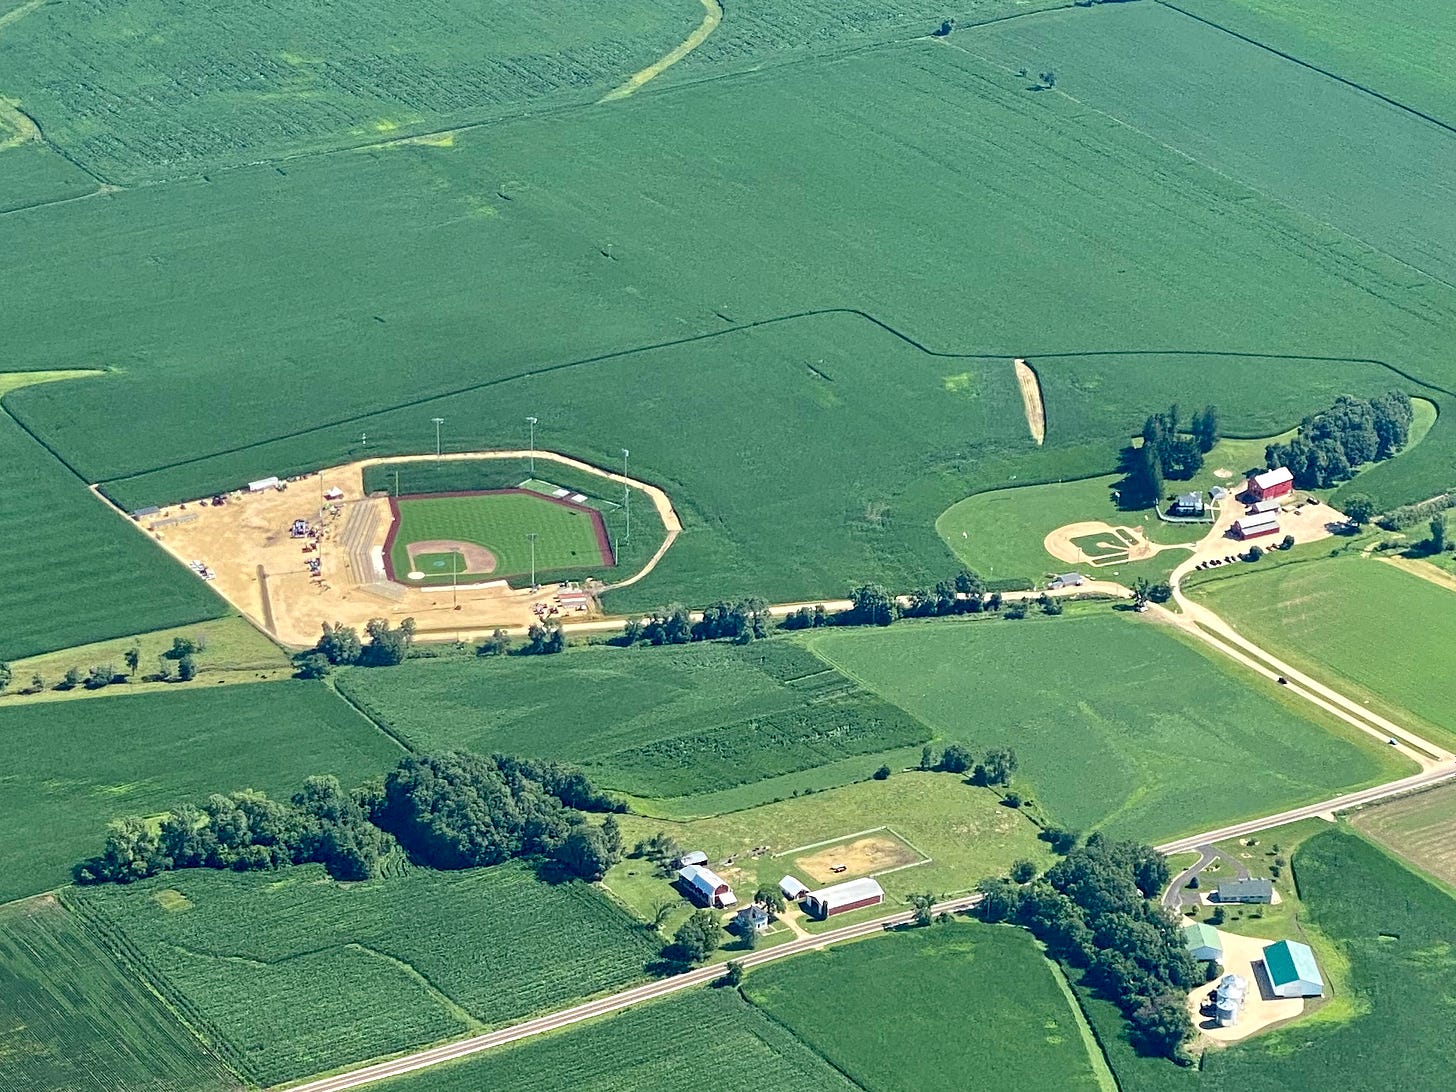 File:MLB at Field of Dreams (aerial view).jpg - Wikipedia